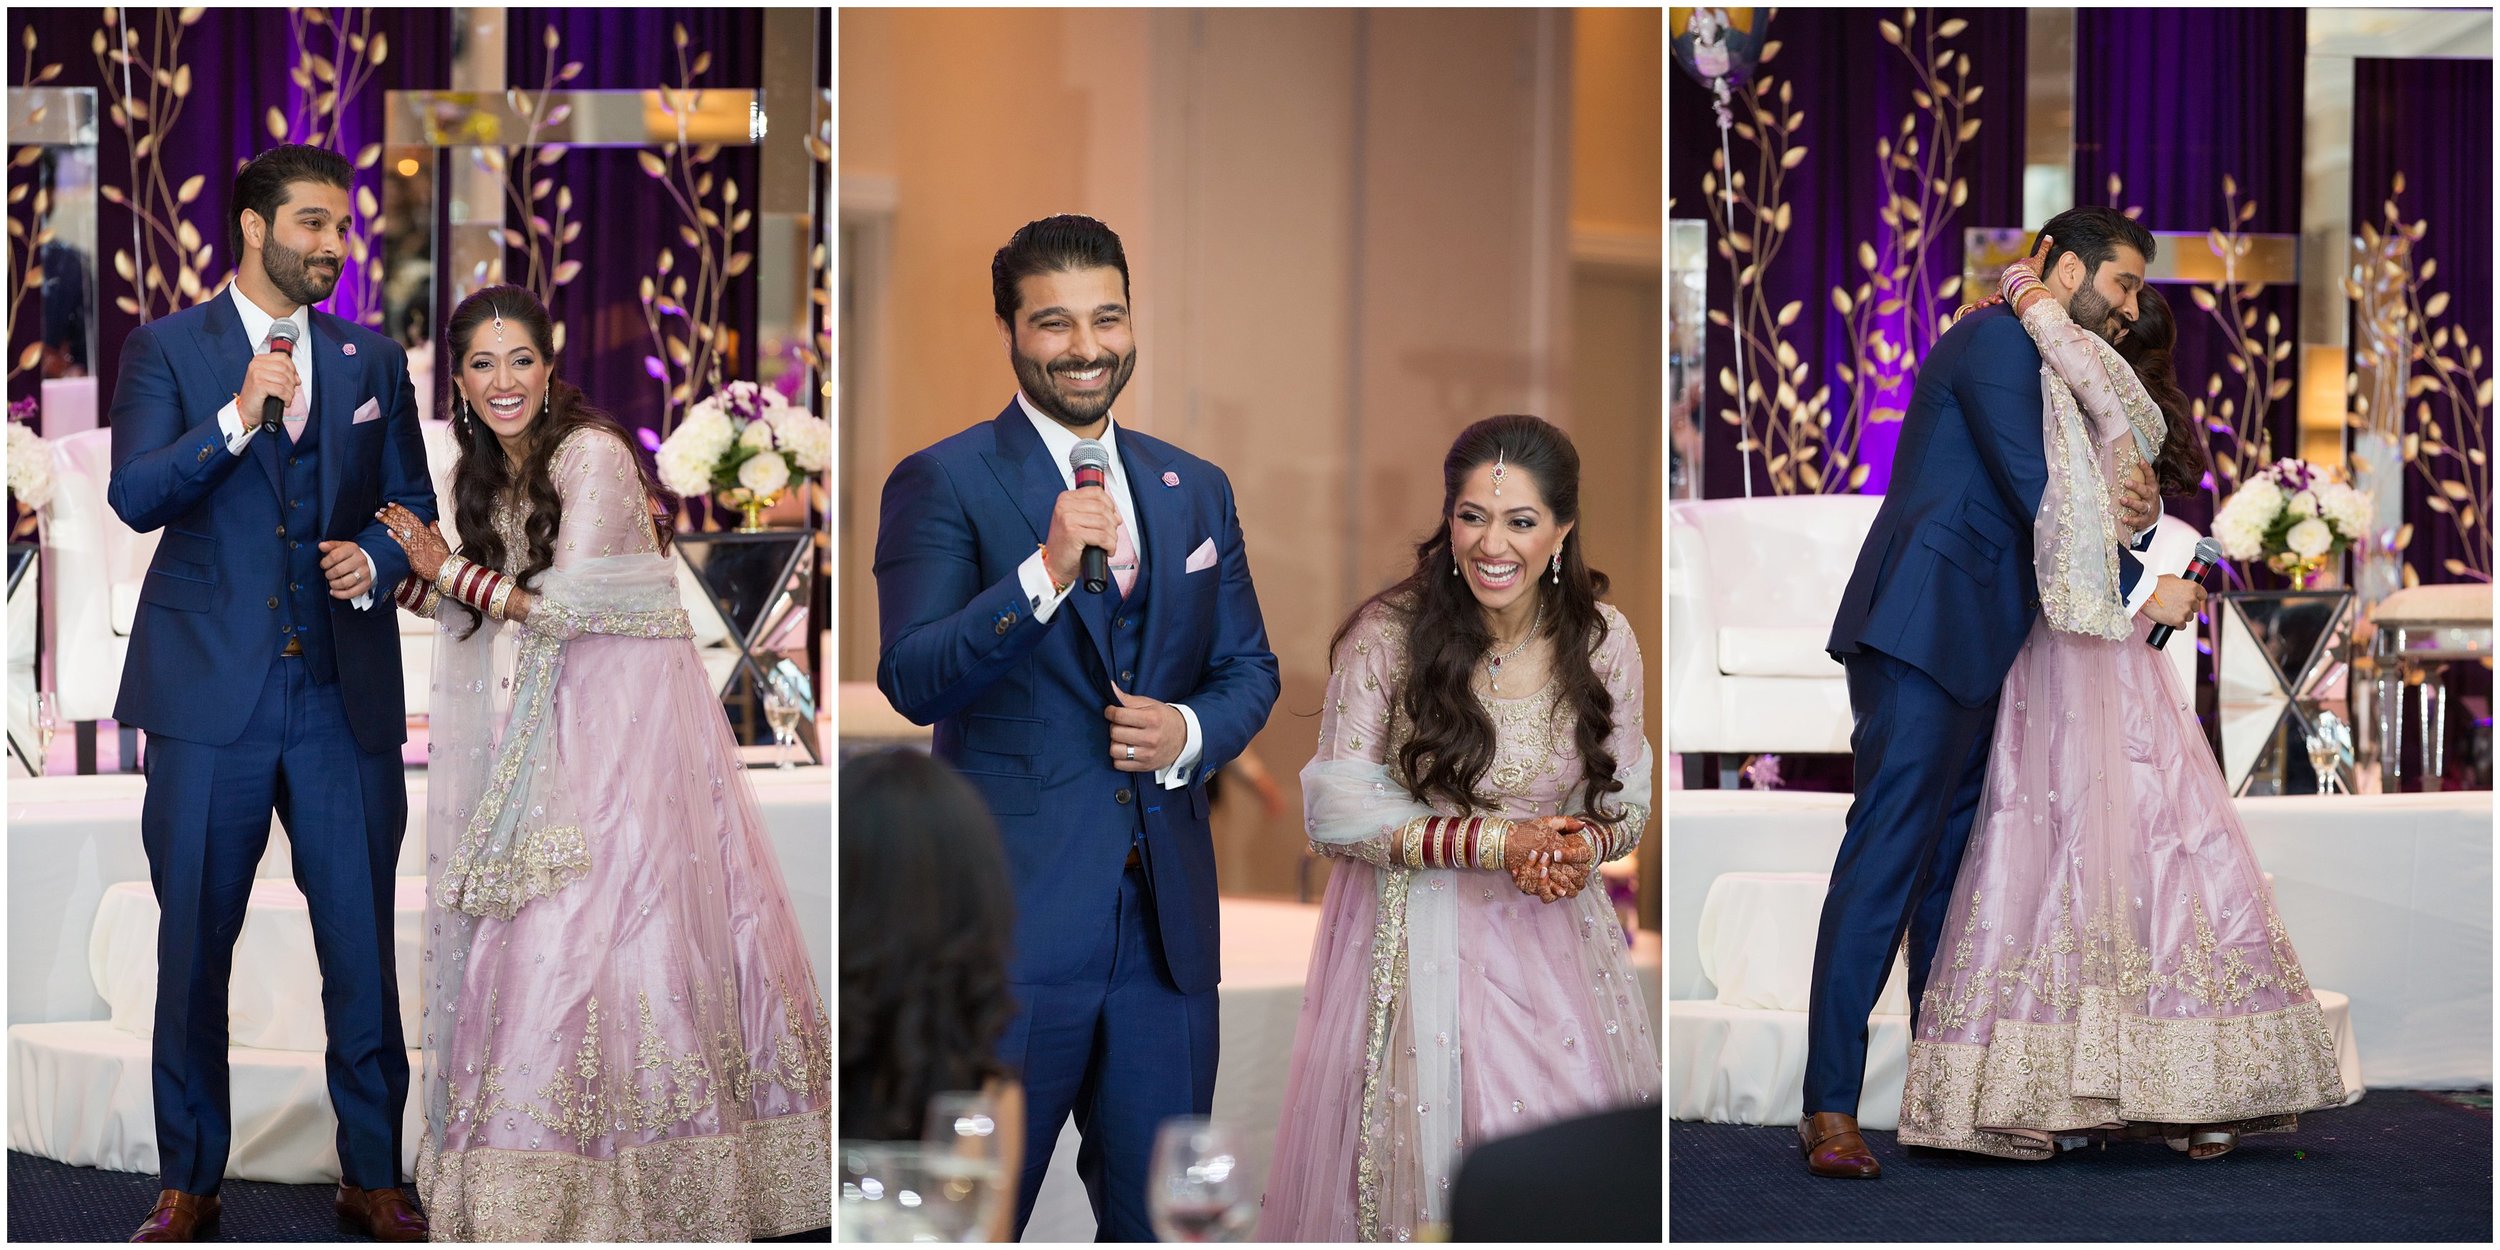 Le Cape Weddings - South Asian Wedding in Illinois - Tanvi and Anshul -1449_LuxuryDestinationPhotographer.jpg